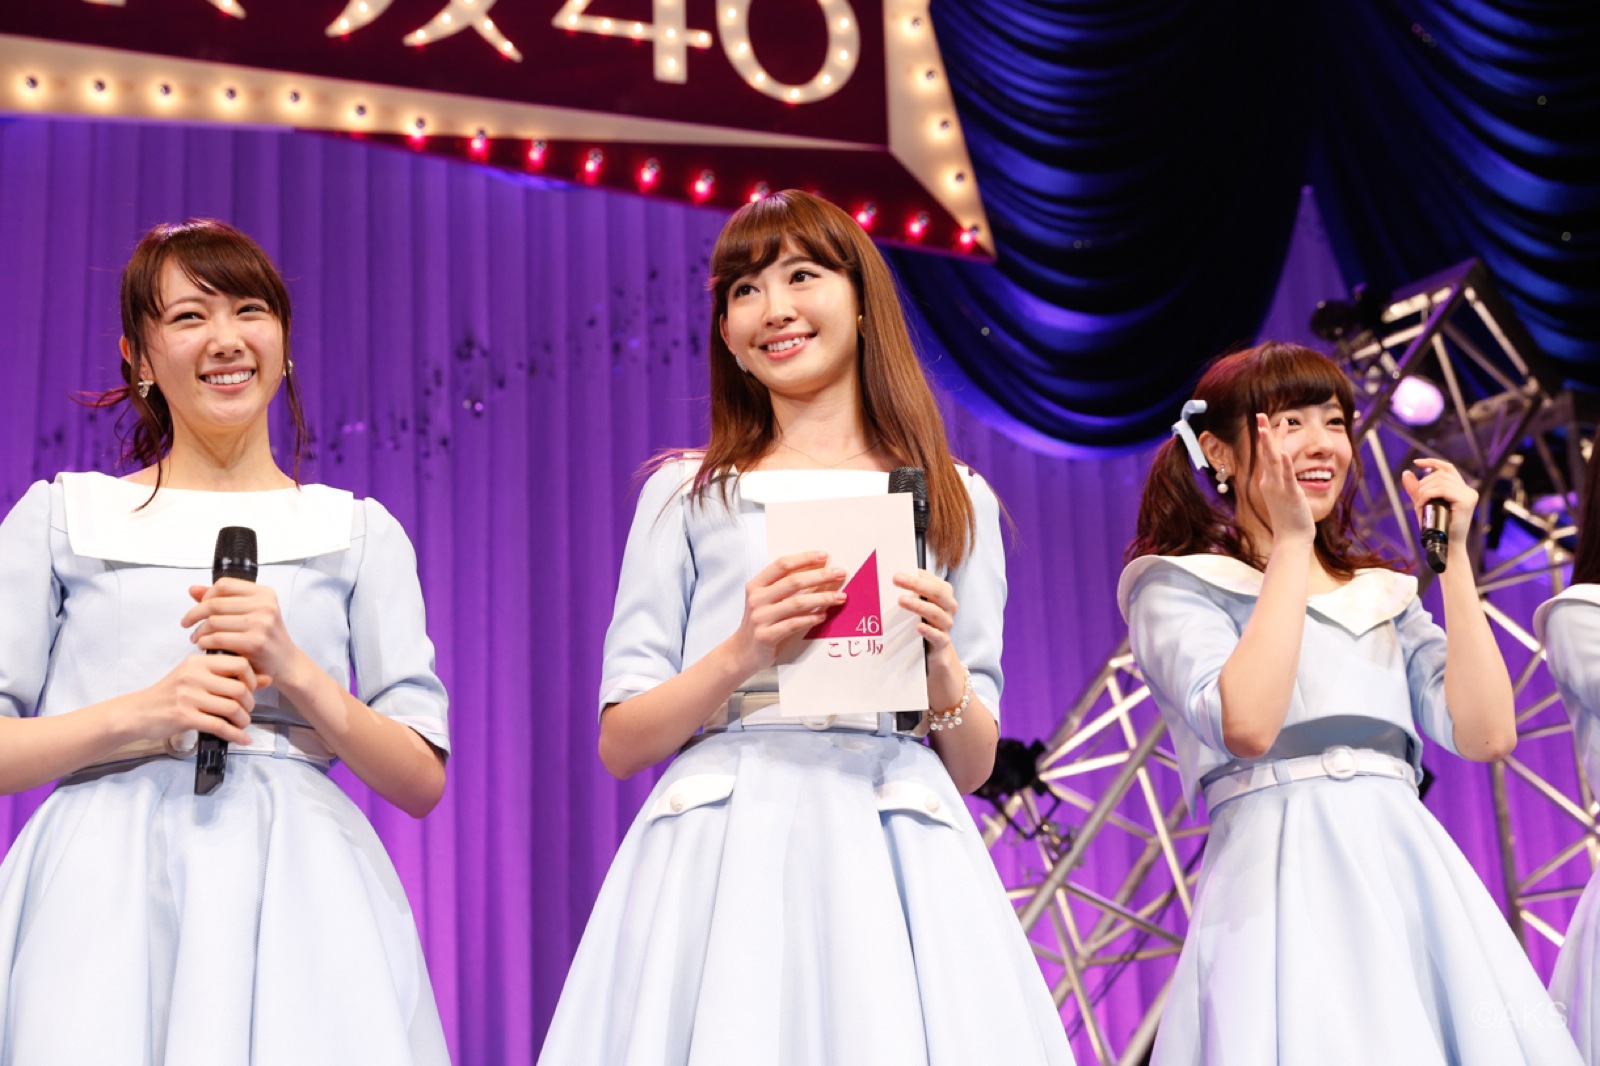 AKB48’s Haruna Kojima Makes Surprise Appearance at Nogizaka46 Concert to Debut “Kojizaka 46” Song!